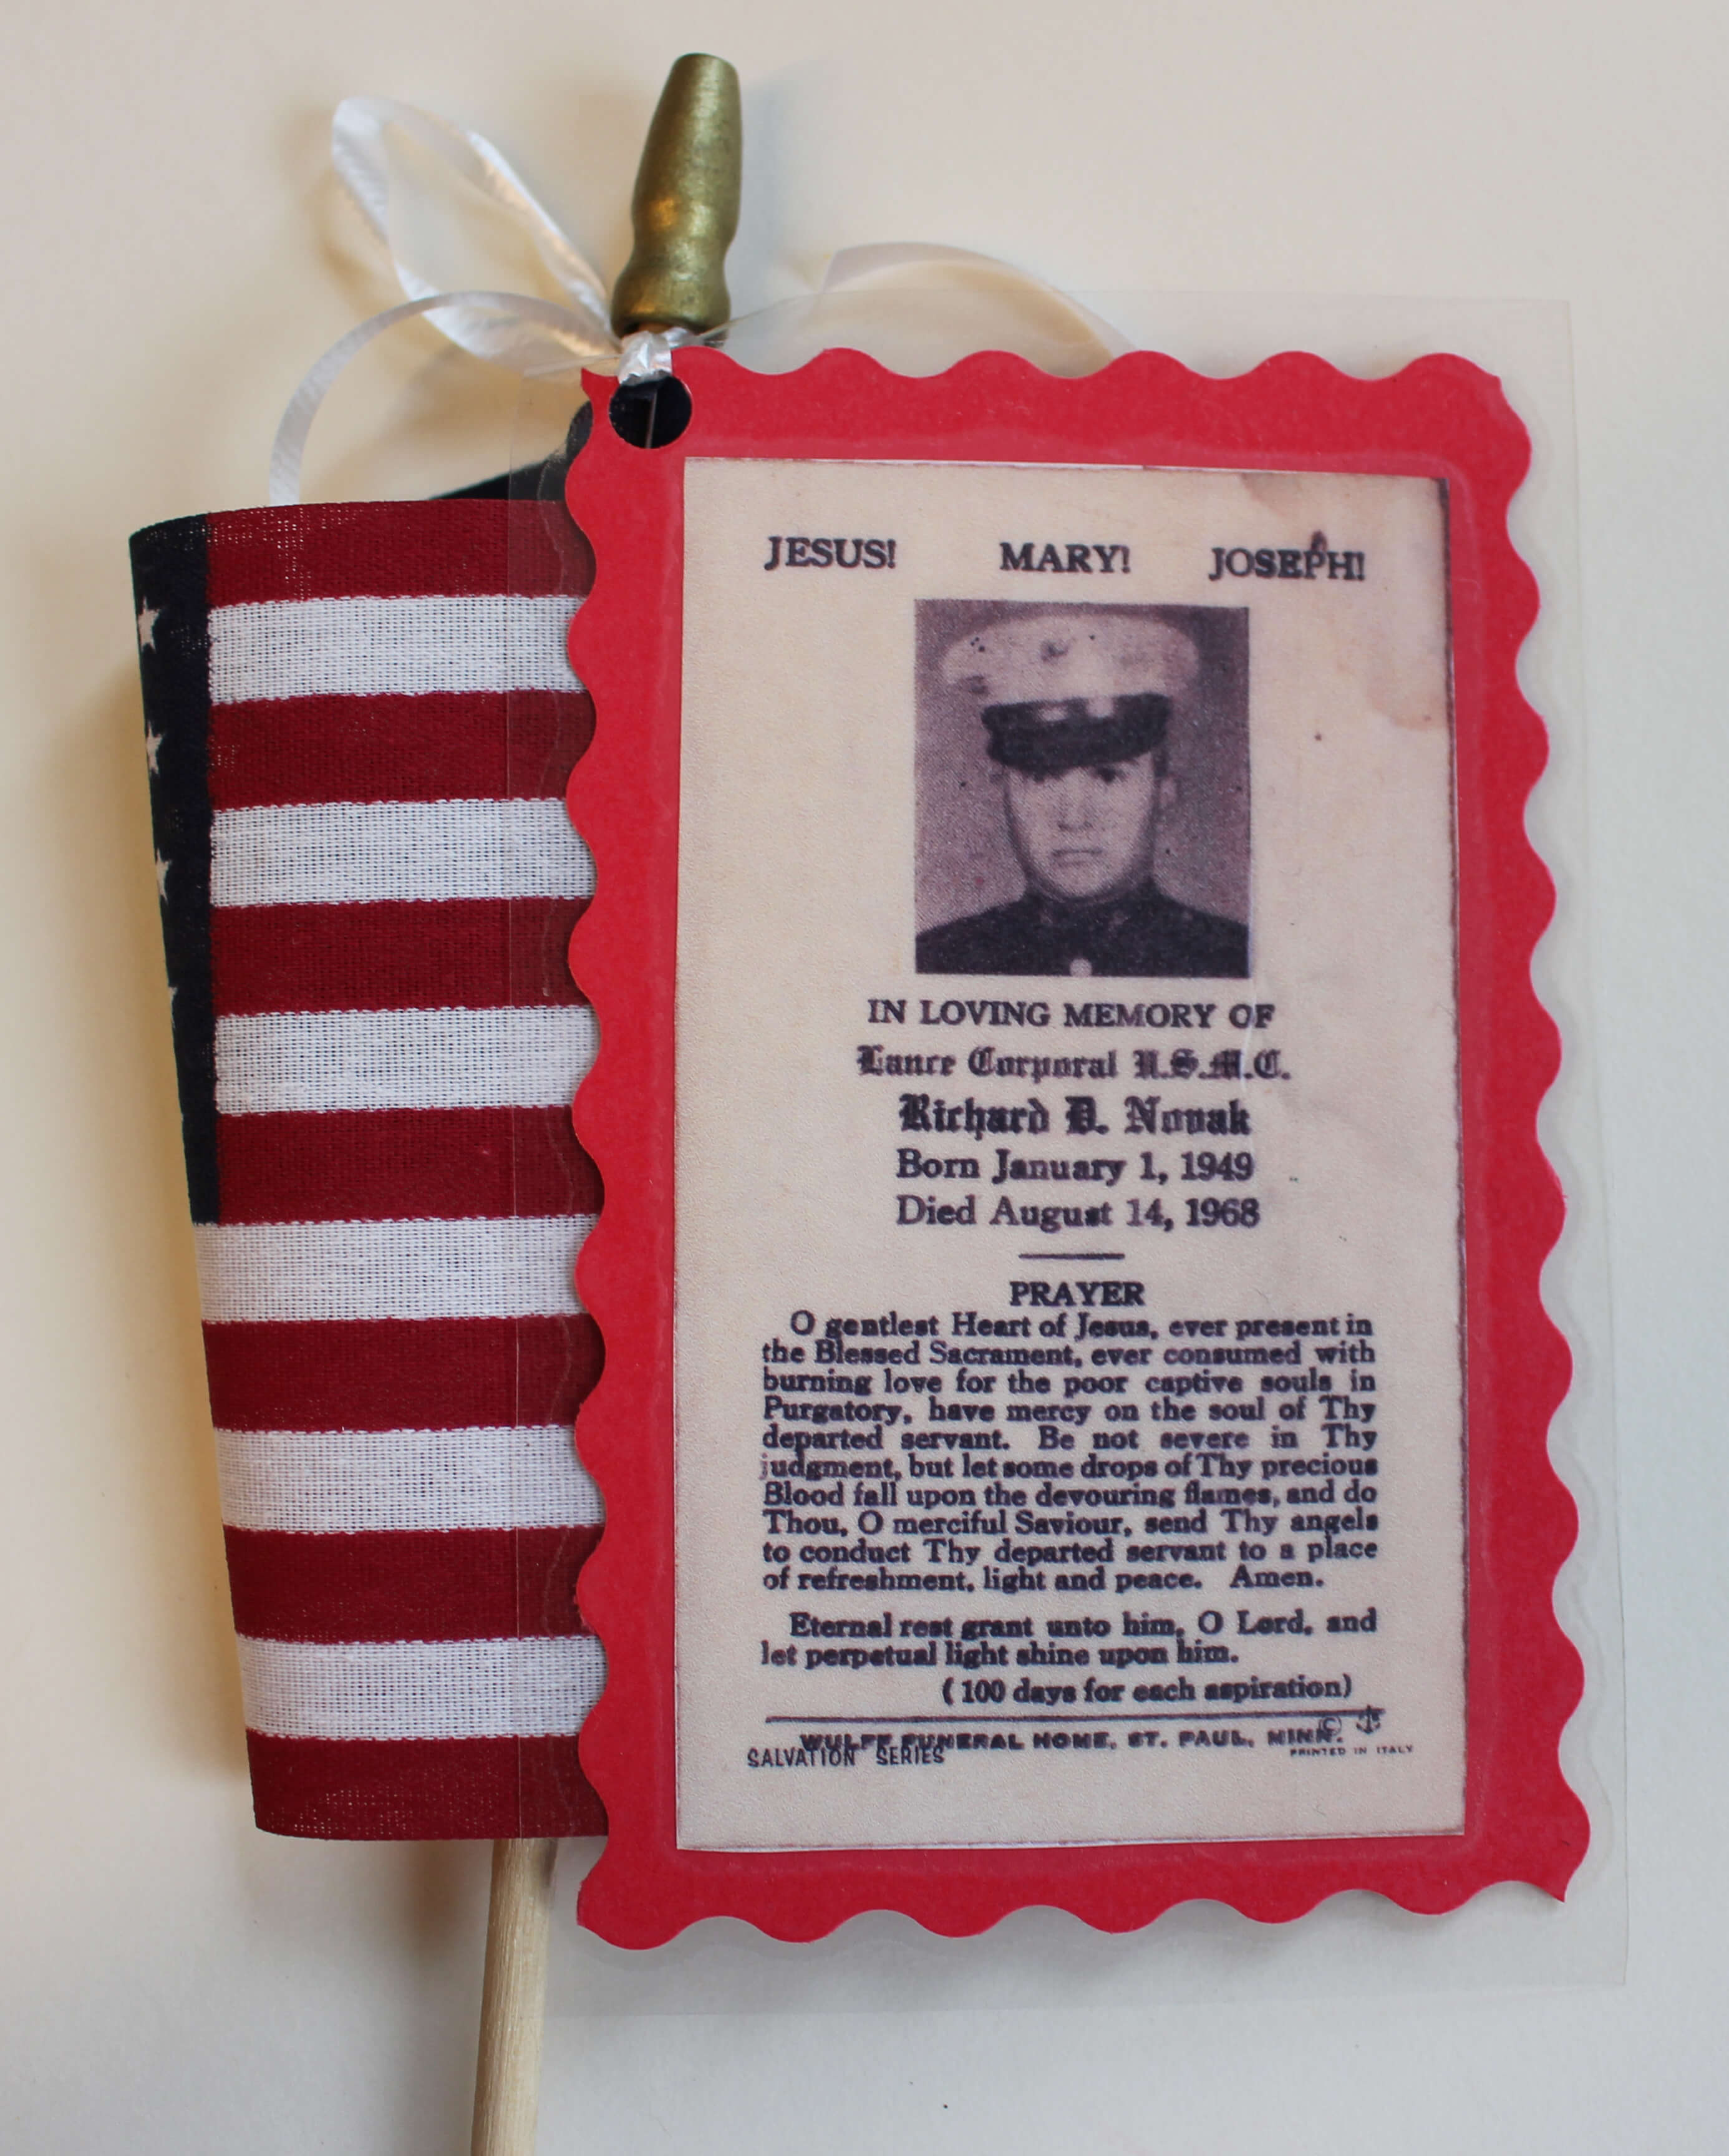 American flag with memorial tribute to Lance Corporal U.S.M.C. Richard D. Novak